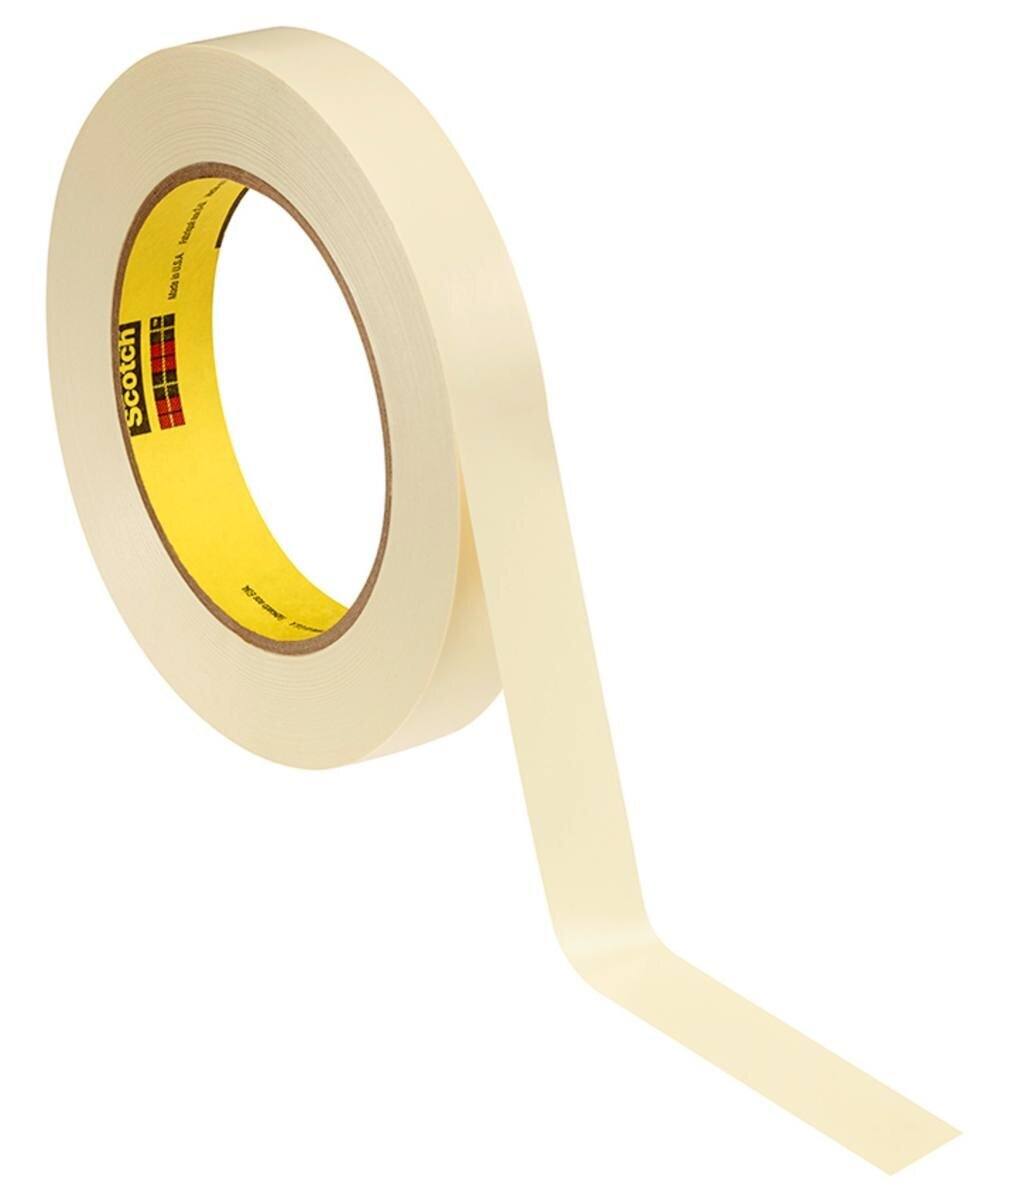 3M Electroplating tape soft PVC 470, yellow, 9 mm x 33 m, 0.18 mm